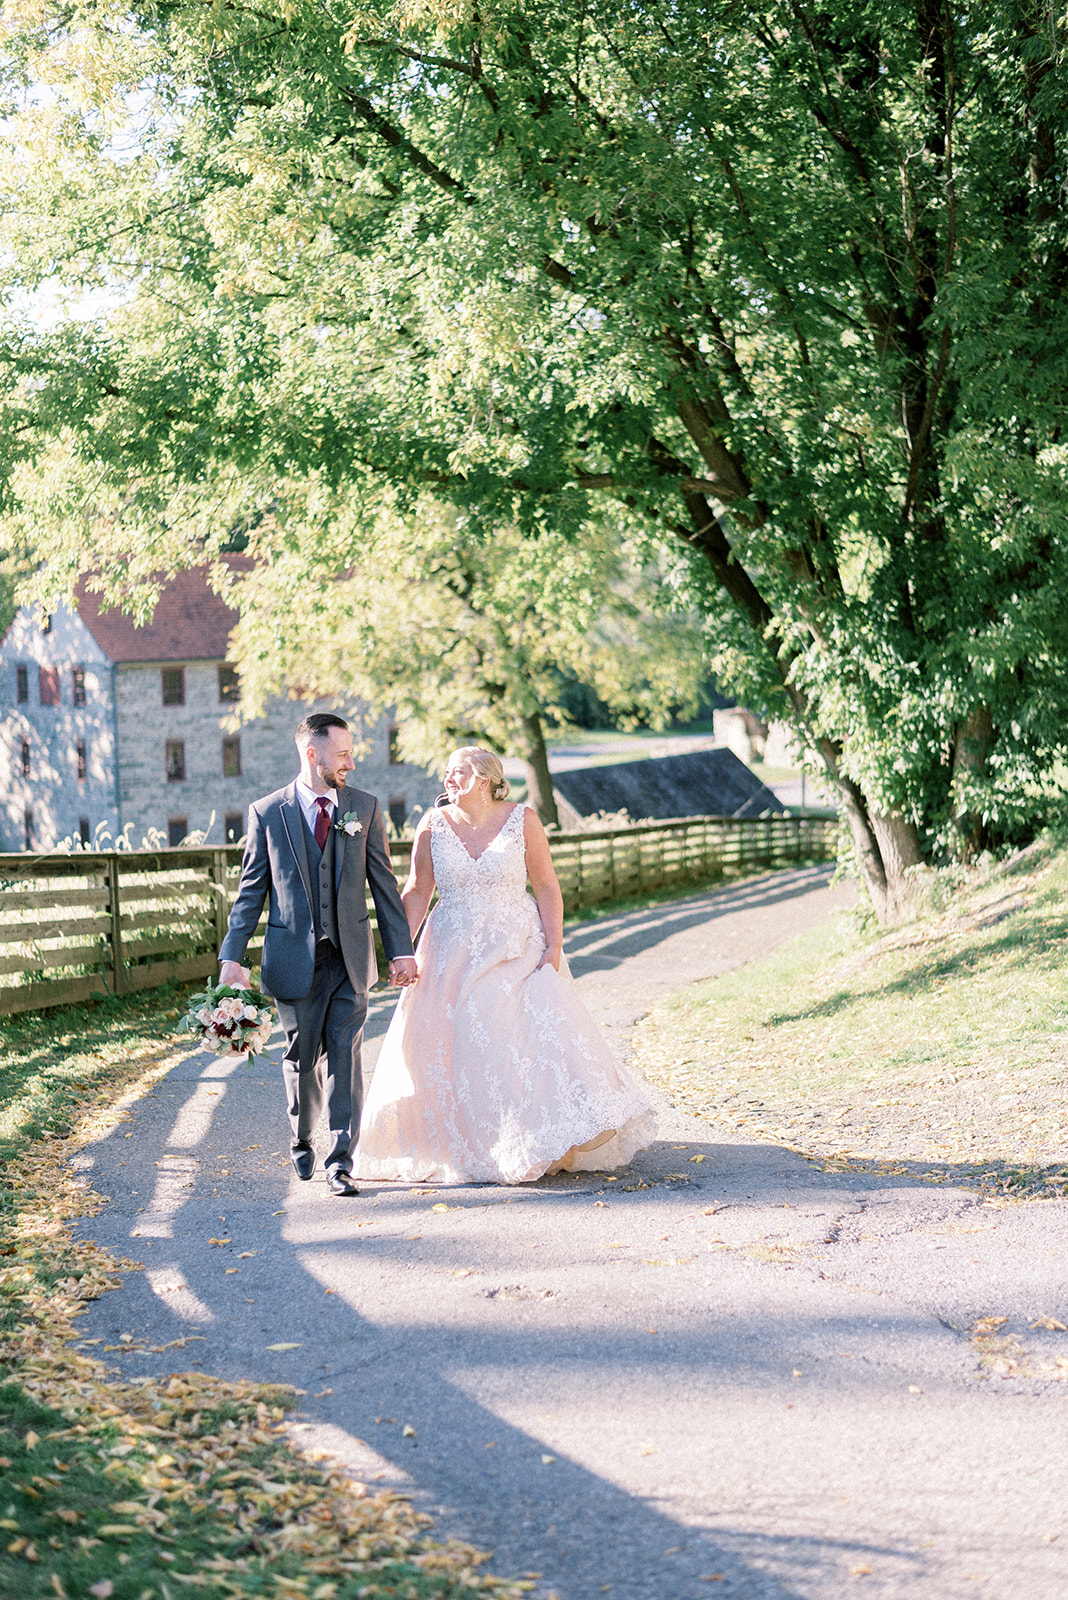 Pennsylvania wedding photographer captures couple walking together after wedding ceremony